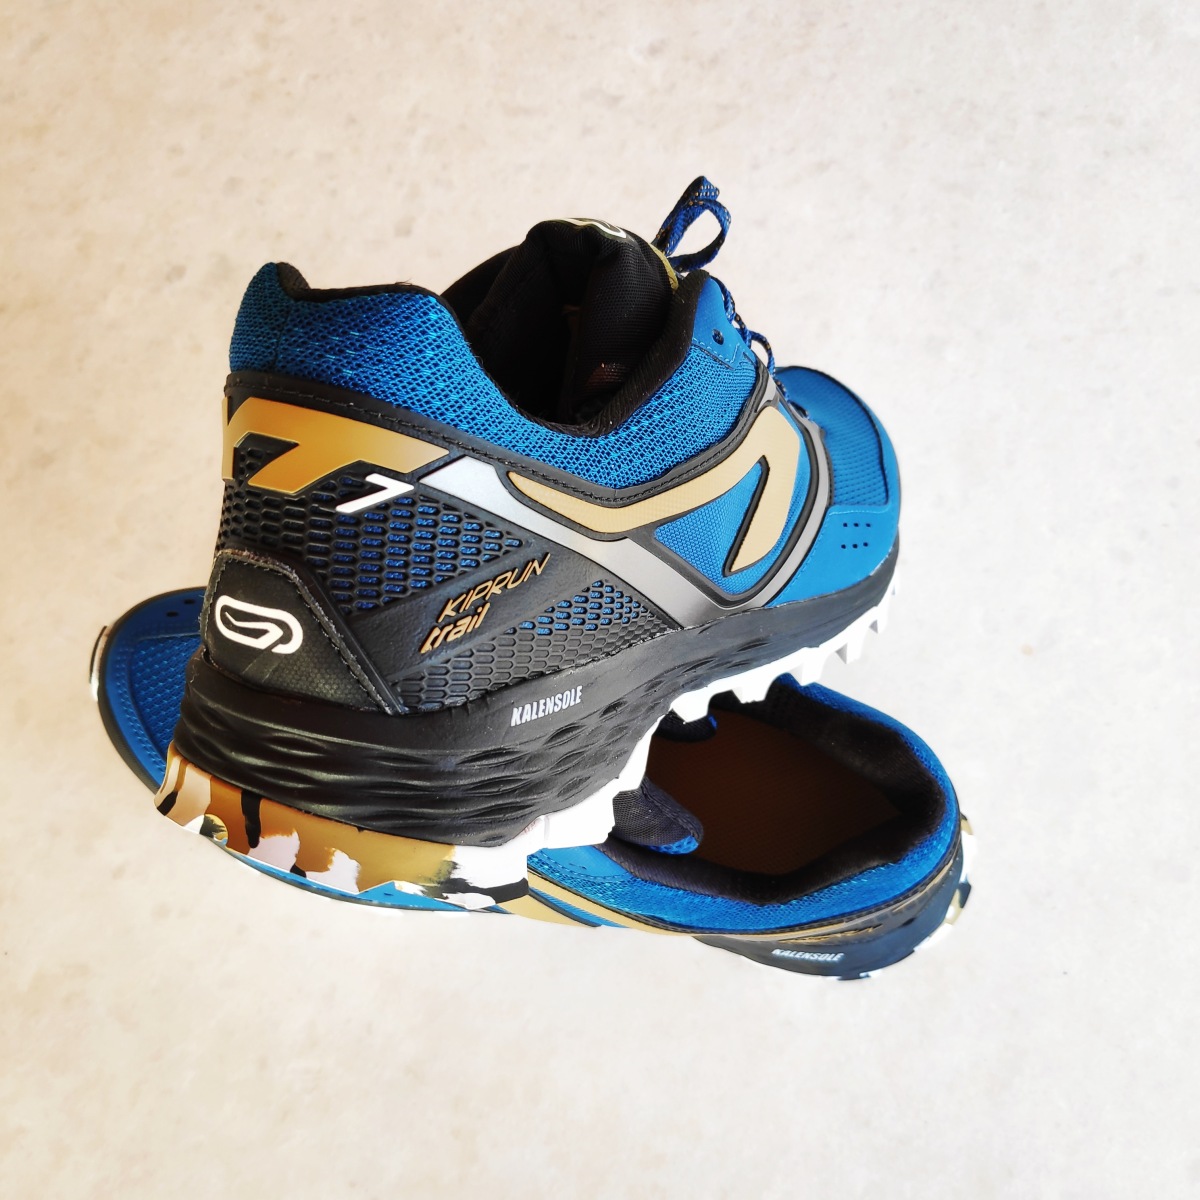 Kalenji Kiprun Trail running shoes Review Olympus